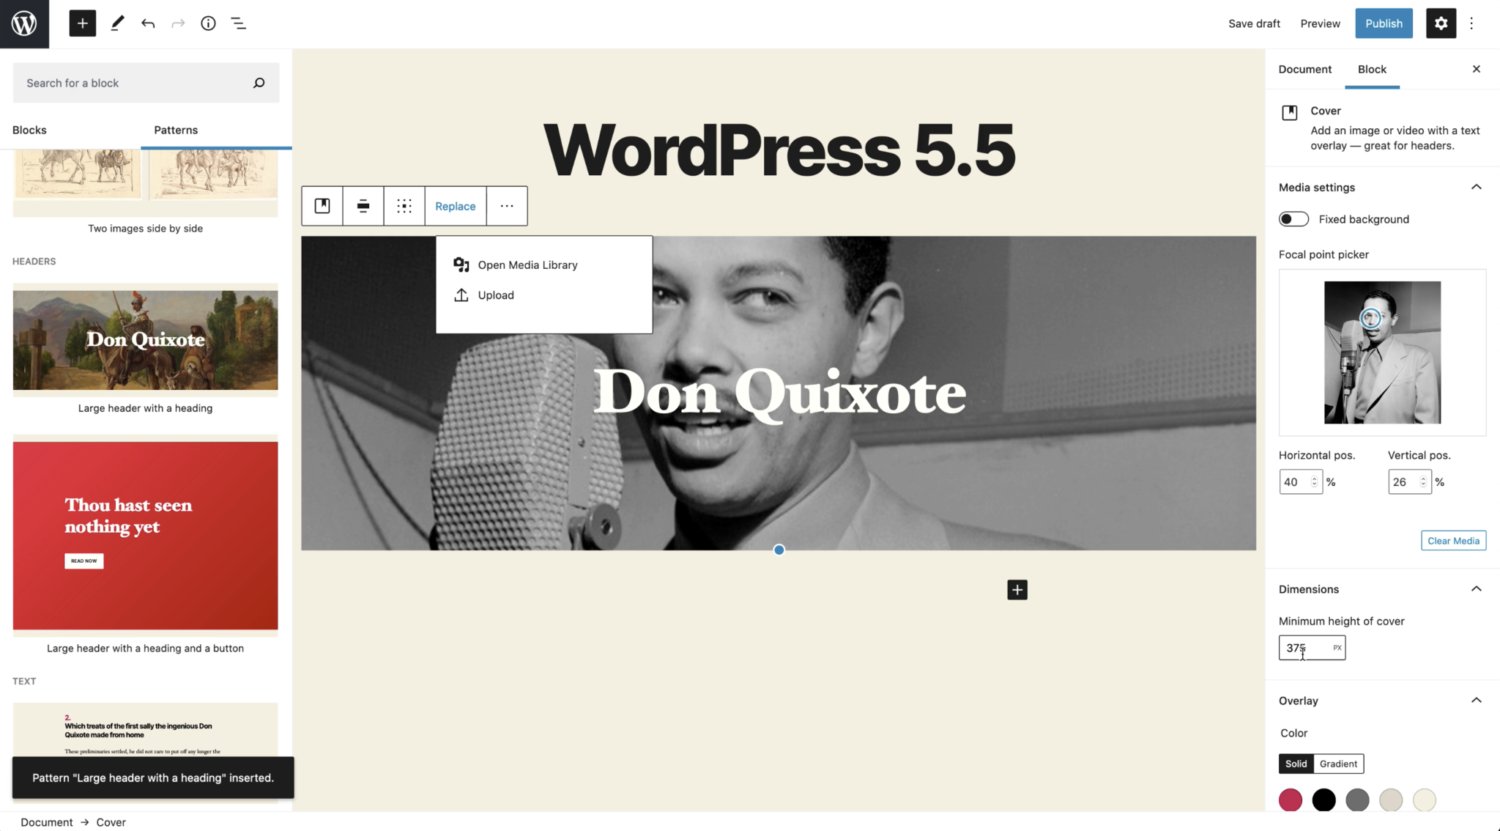 Screenshot from WordPress Patterns